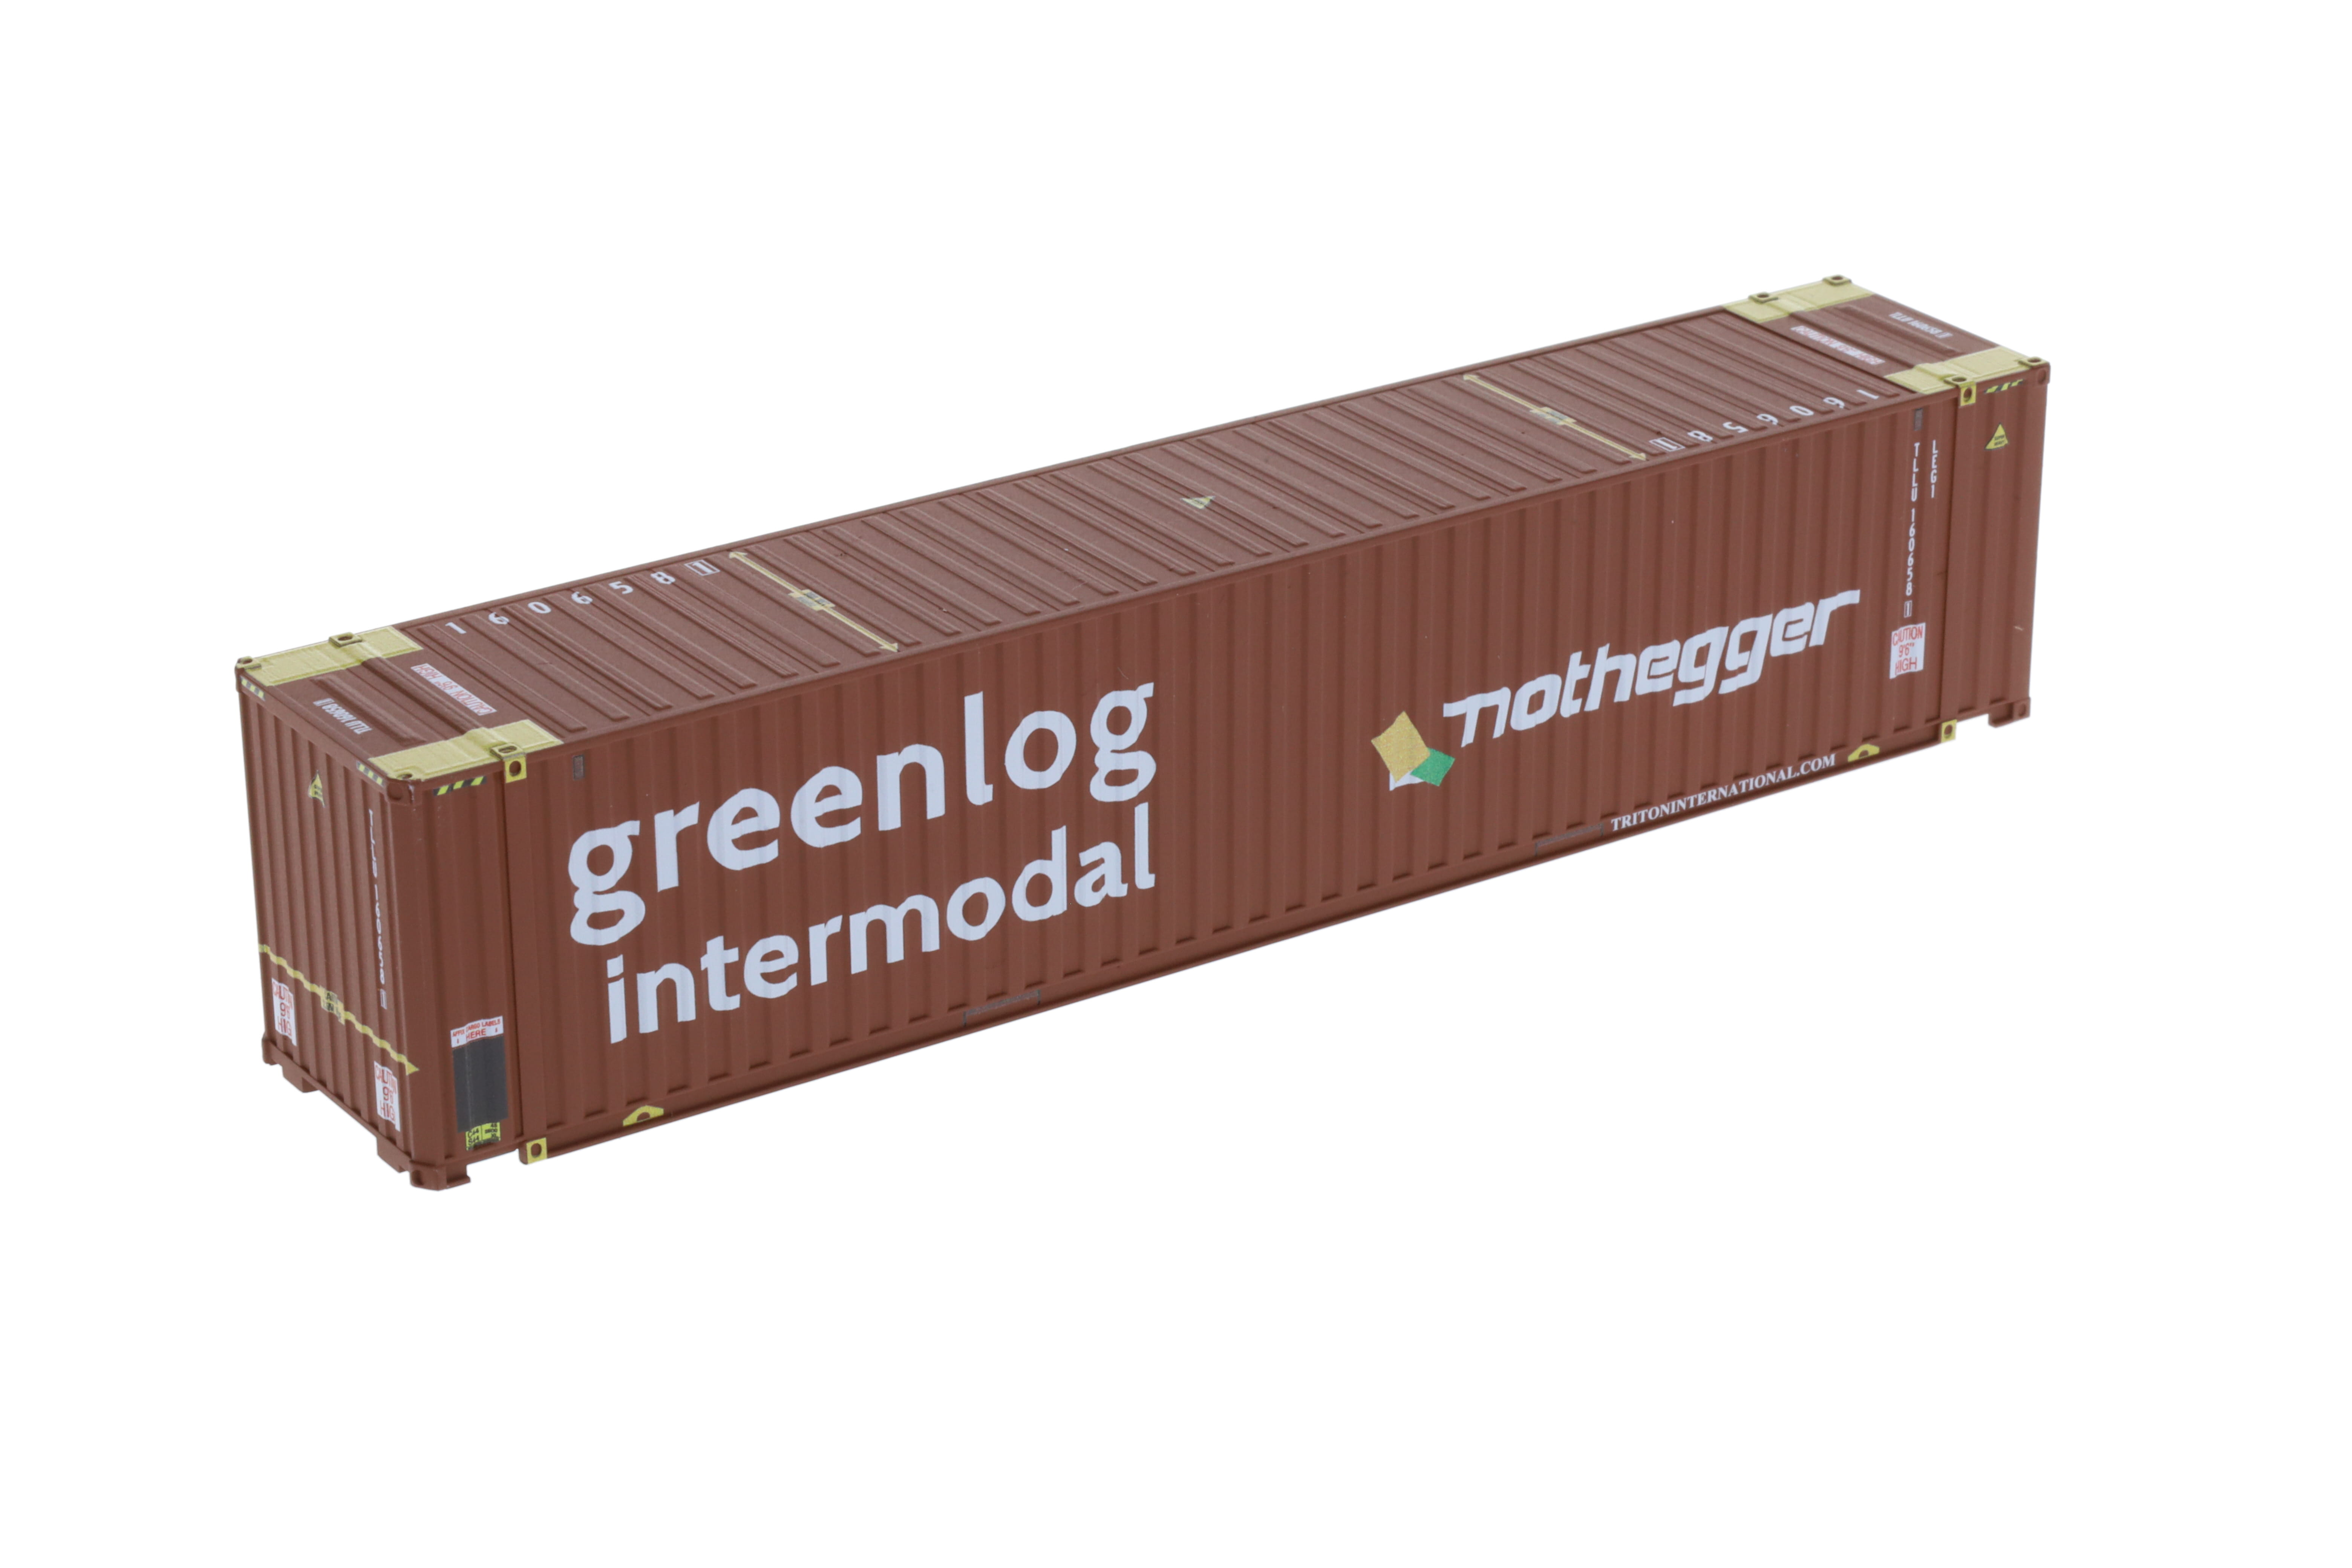 1:87 45´ Container GREENLOG INTERMODAL / NOTHEGGER, WB-A HC (Euro), braun, TRITON-Pool, TLLU 160658 1